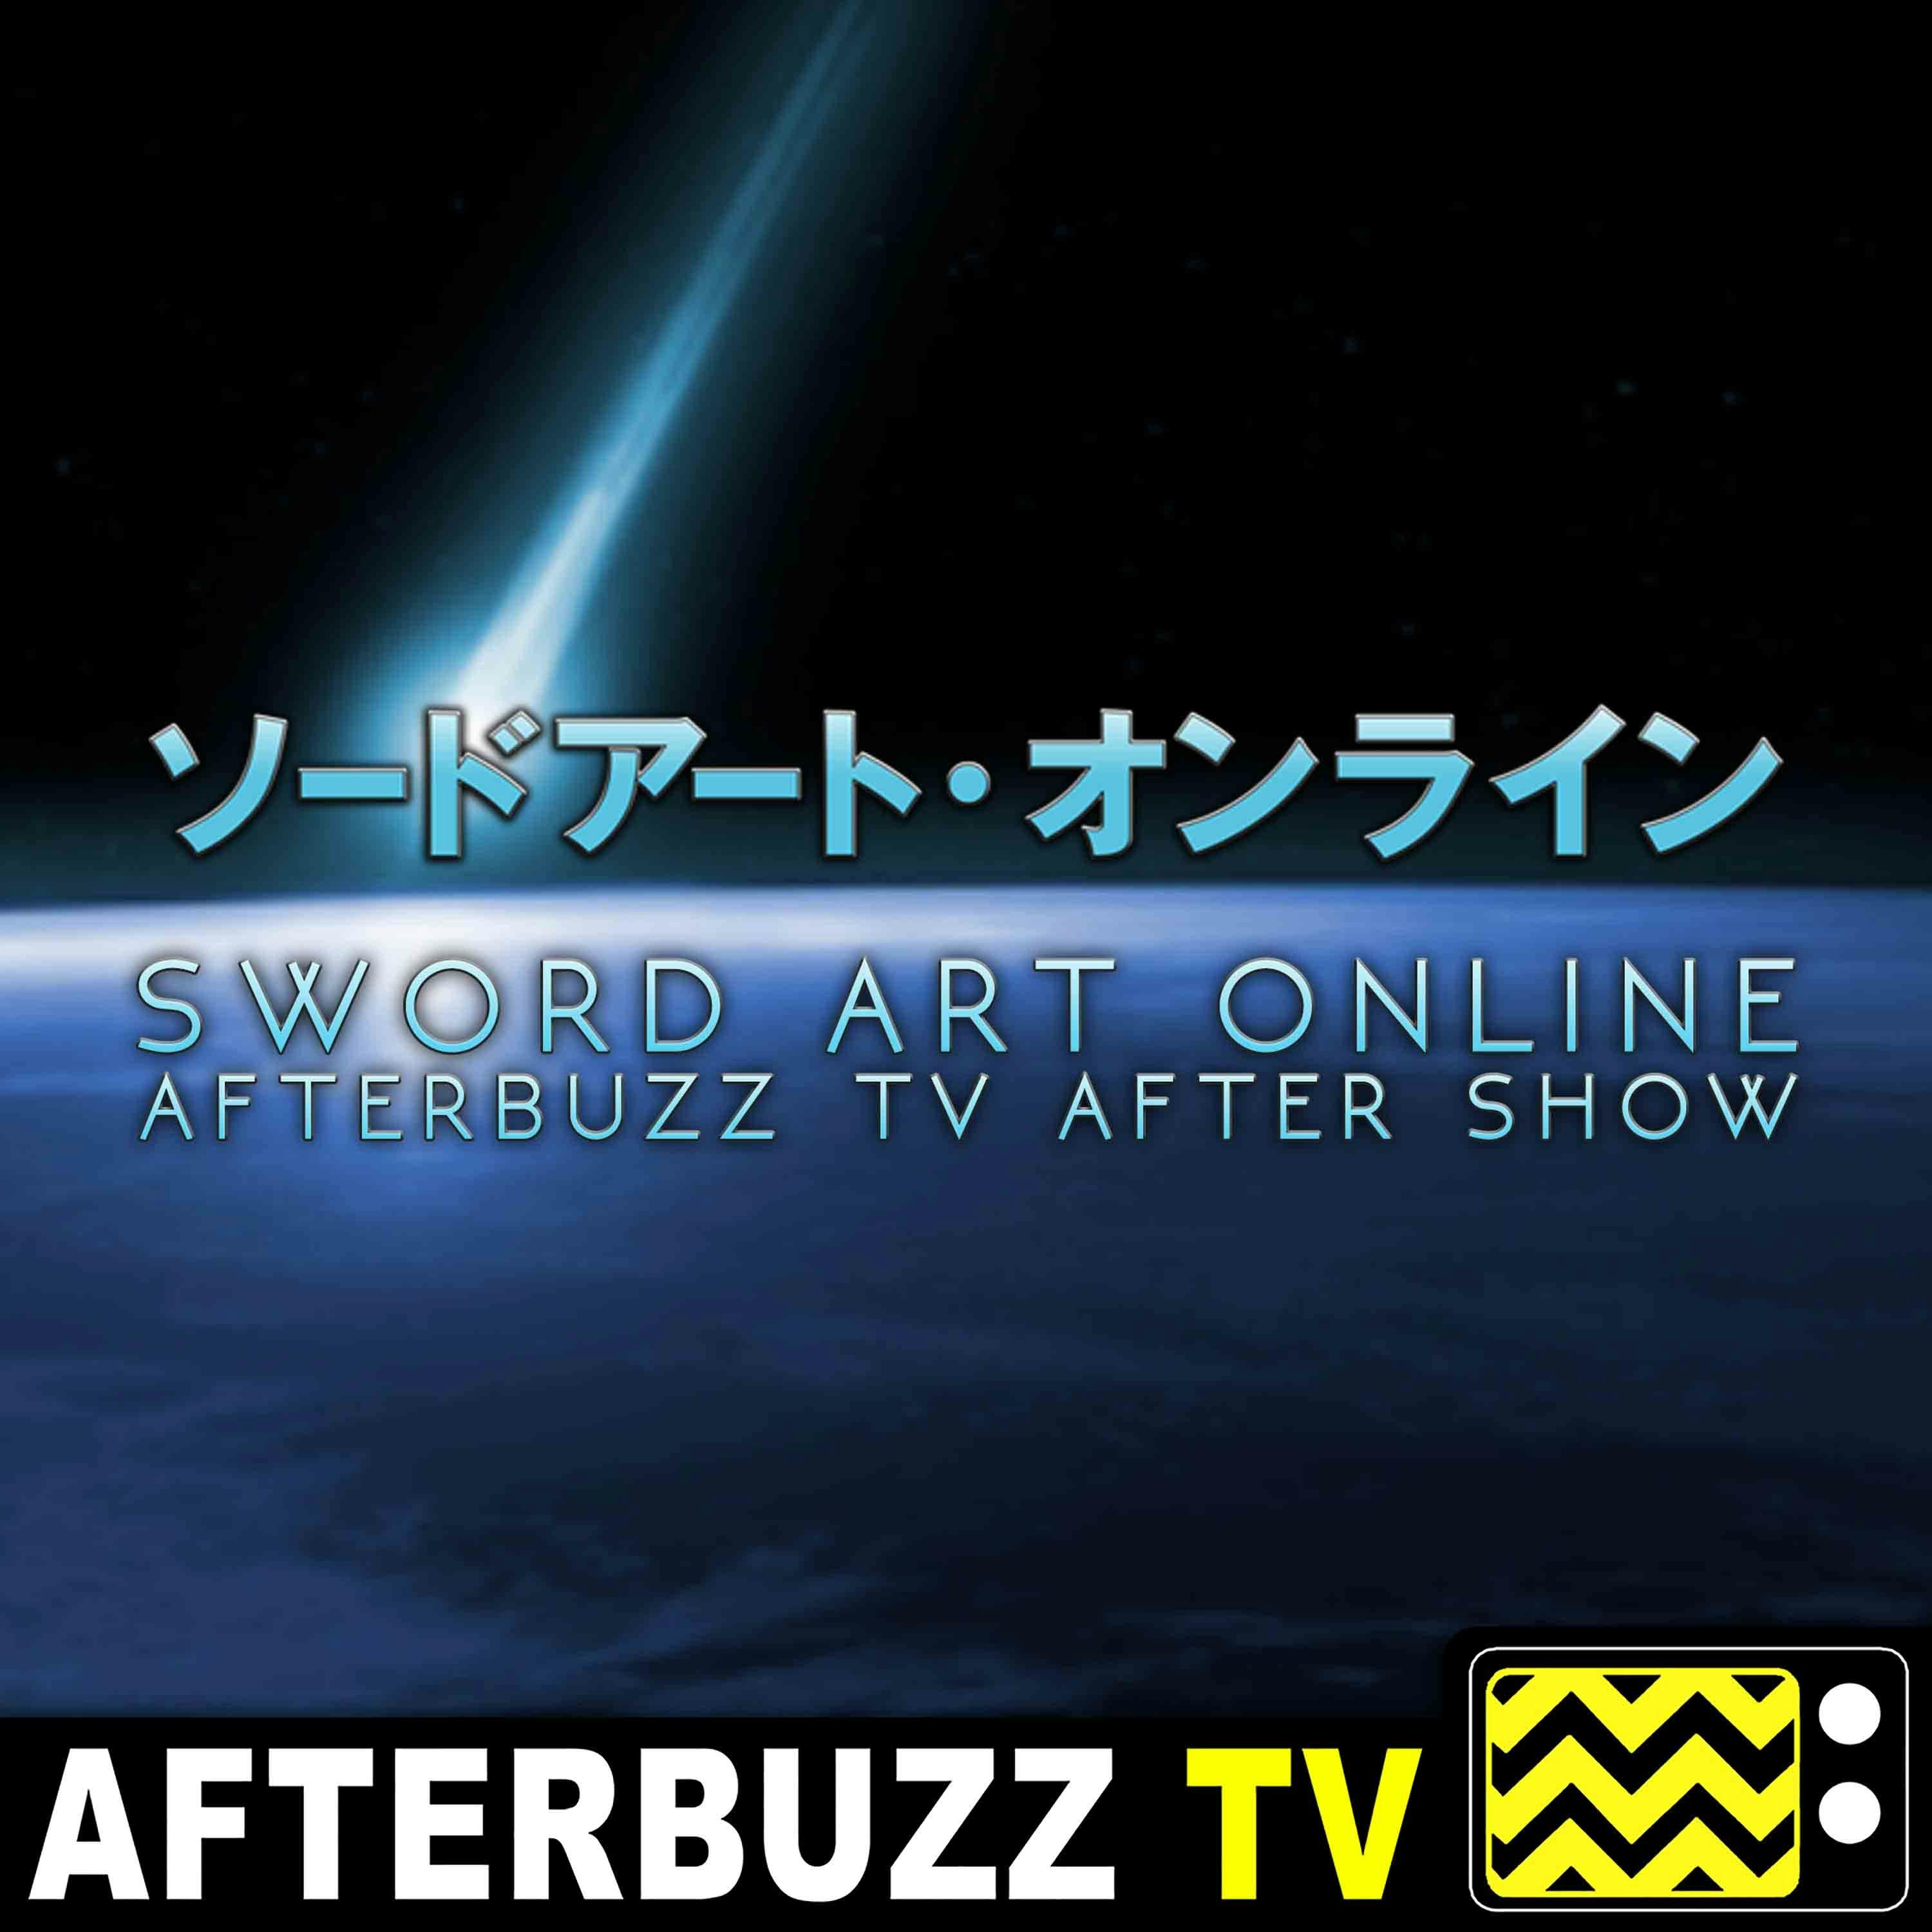 Sword Art Online S:2 | Keith Silverstein Guests on Death Gun; Pursuer of Death E:9 & E:10 | AfterBuzz TV AfterShow